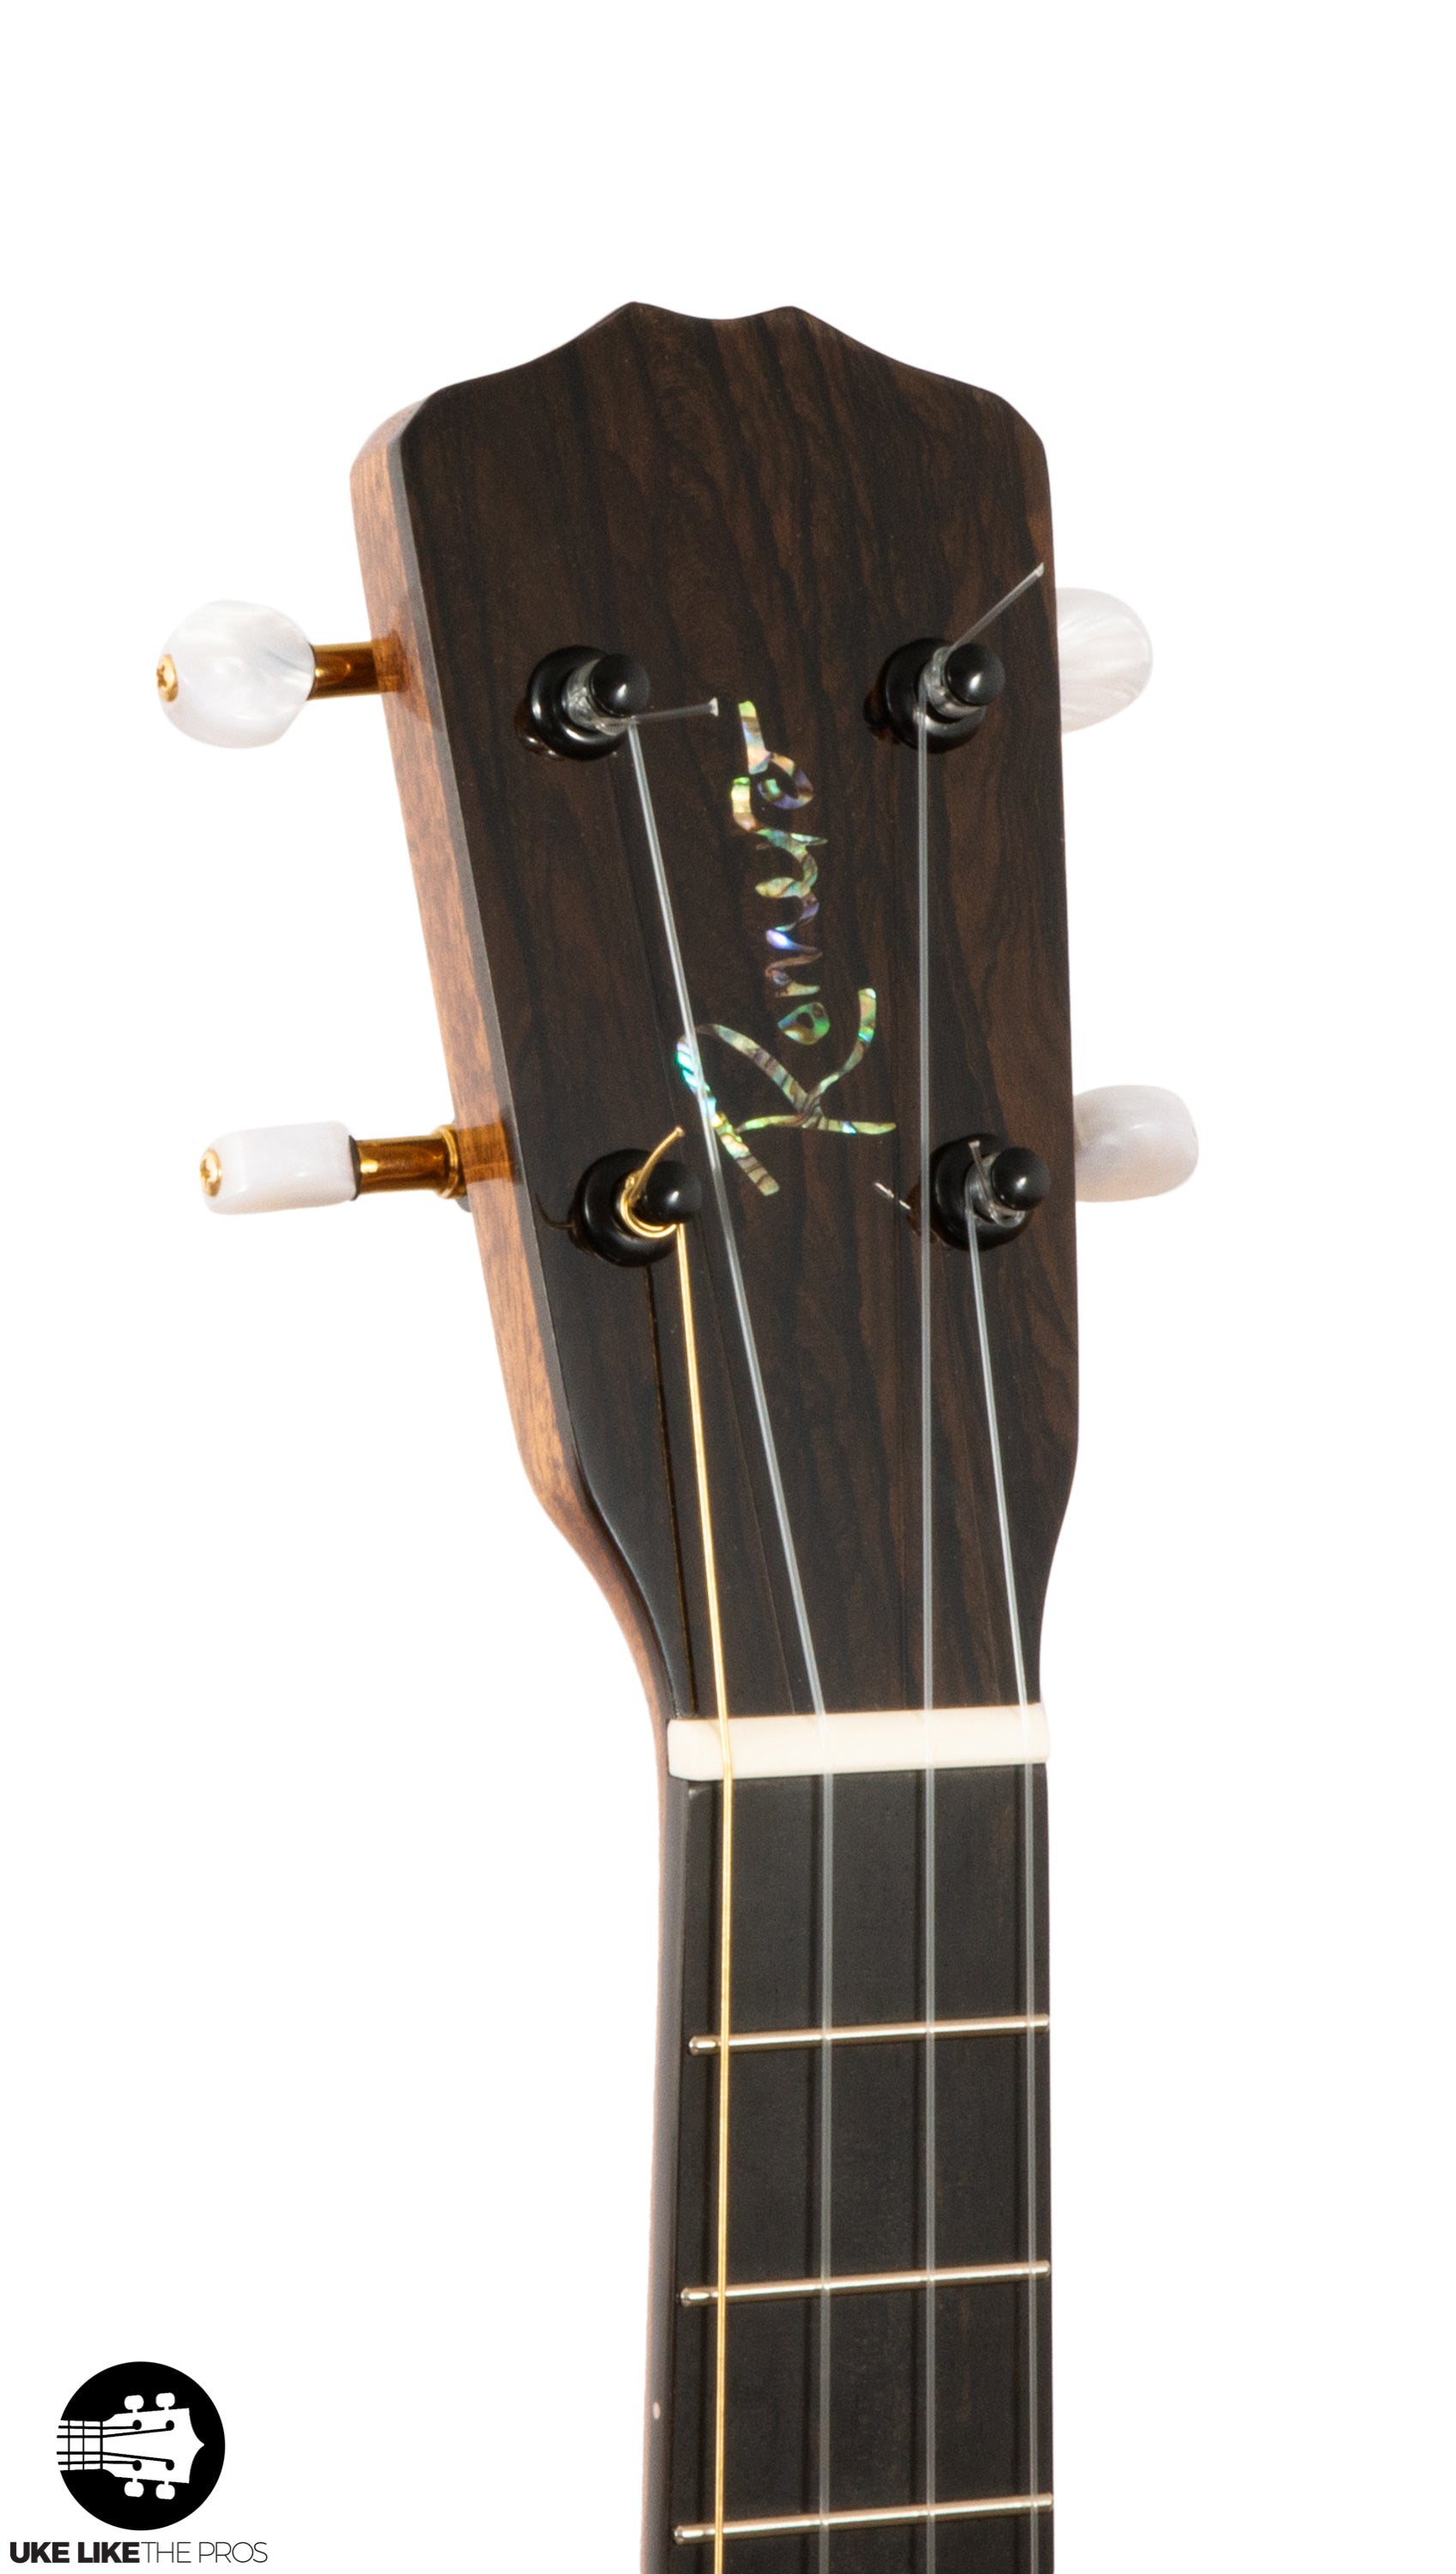 Guitarras Romero Model-T Custom Tenor Ukulele #57